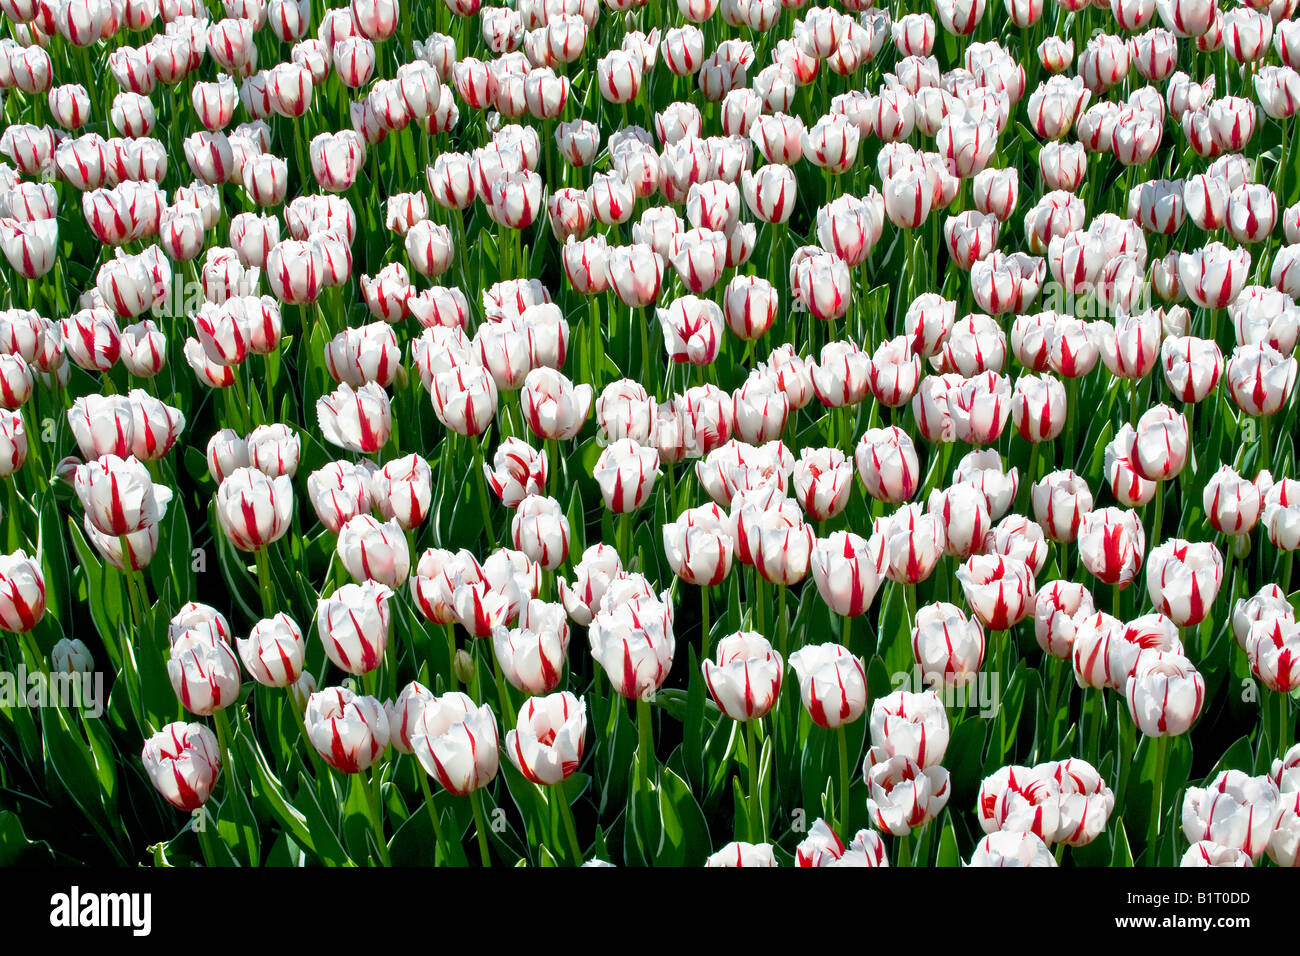 White Tulips (Tulips), Ice Follies cultivar, variety Stock Photo